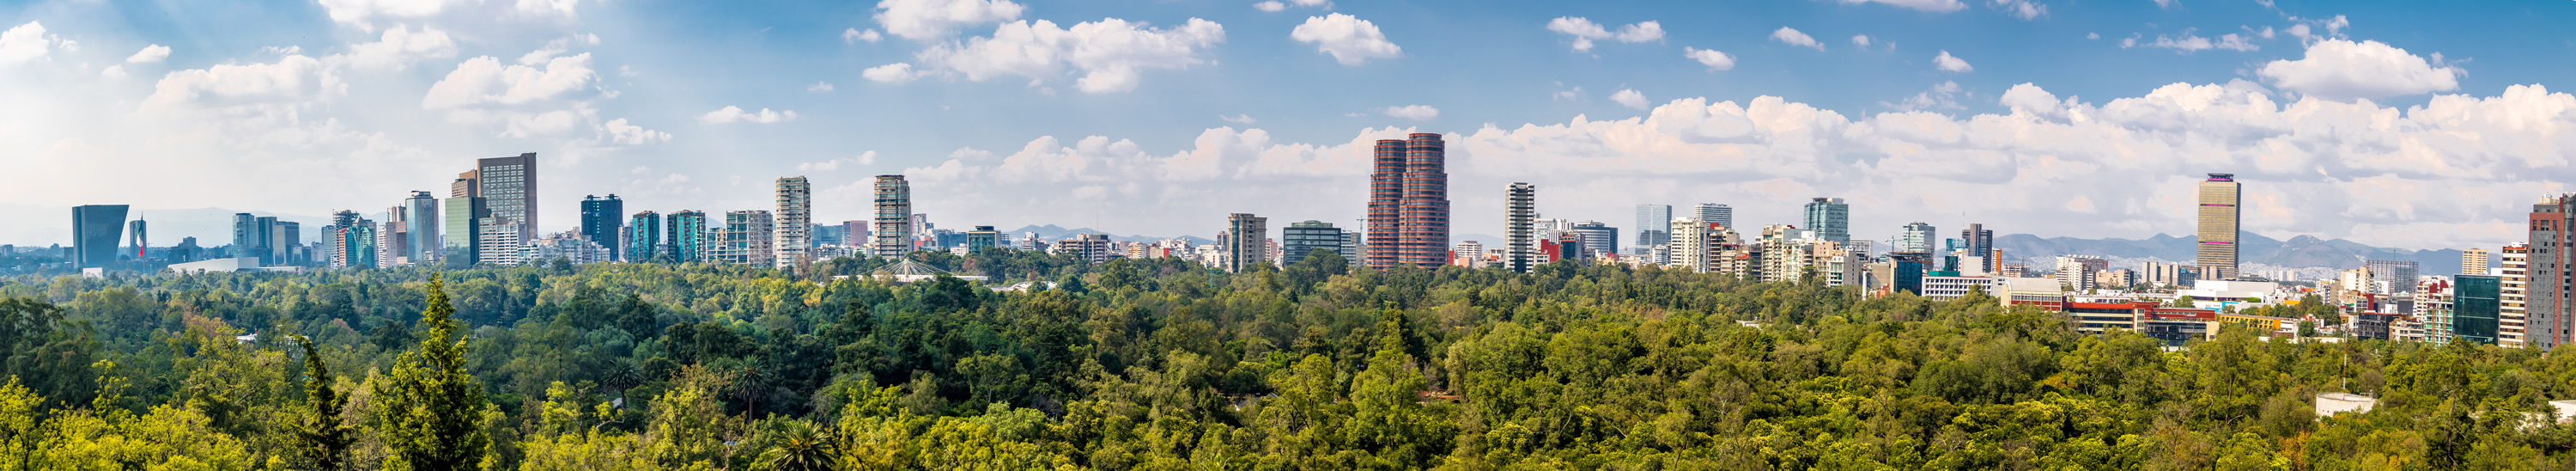 View of Mexico City, Mexico